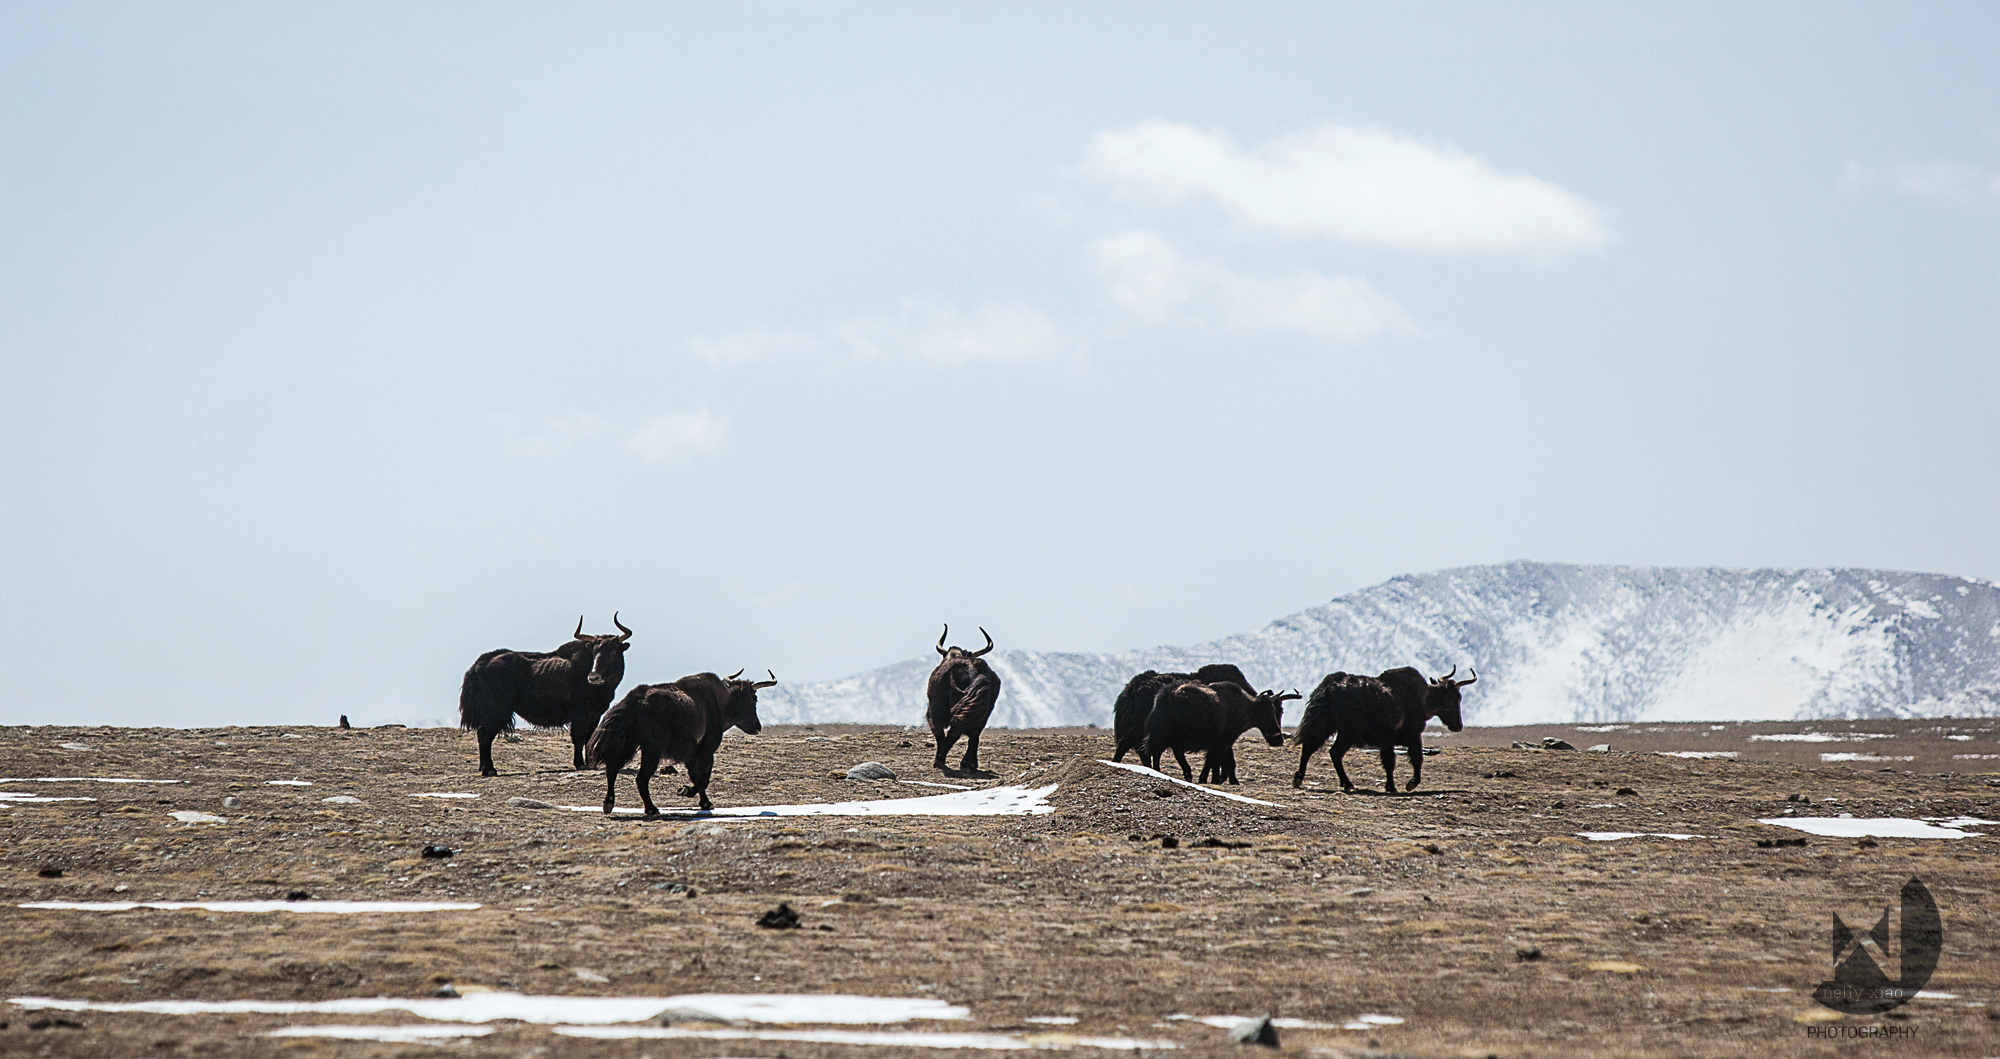   Wild yaks   Kekexili Wildlife Conservation, April 2015&nbsp; 